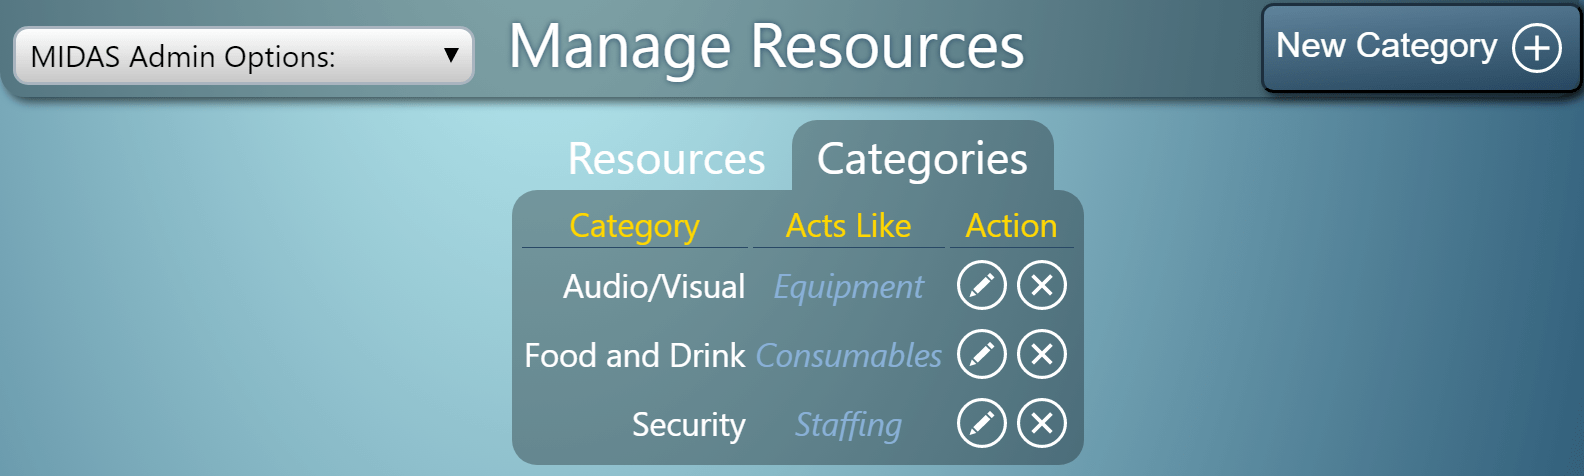 Custom Resource Categories in MIDAS